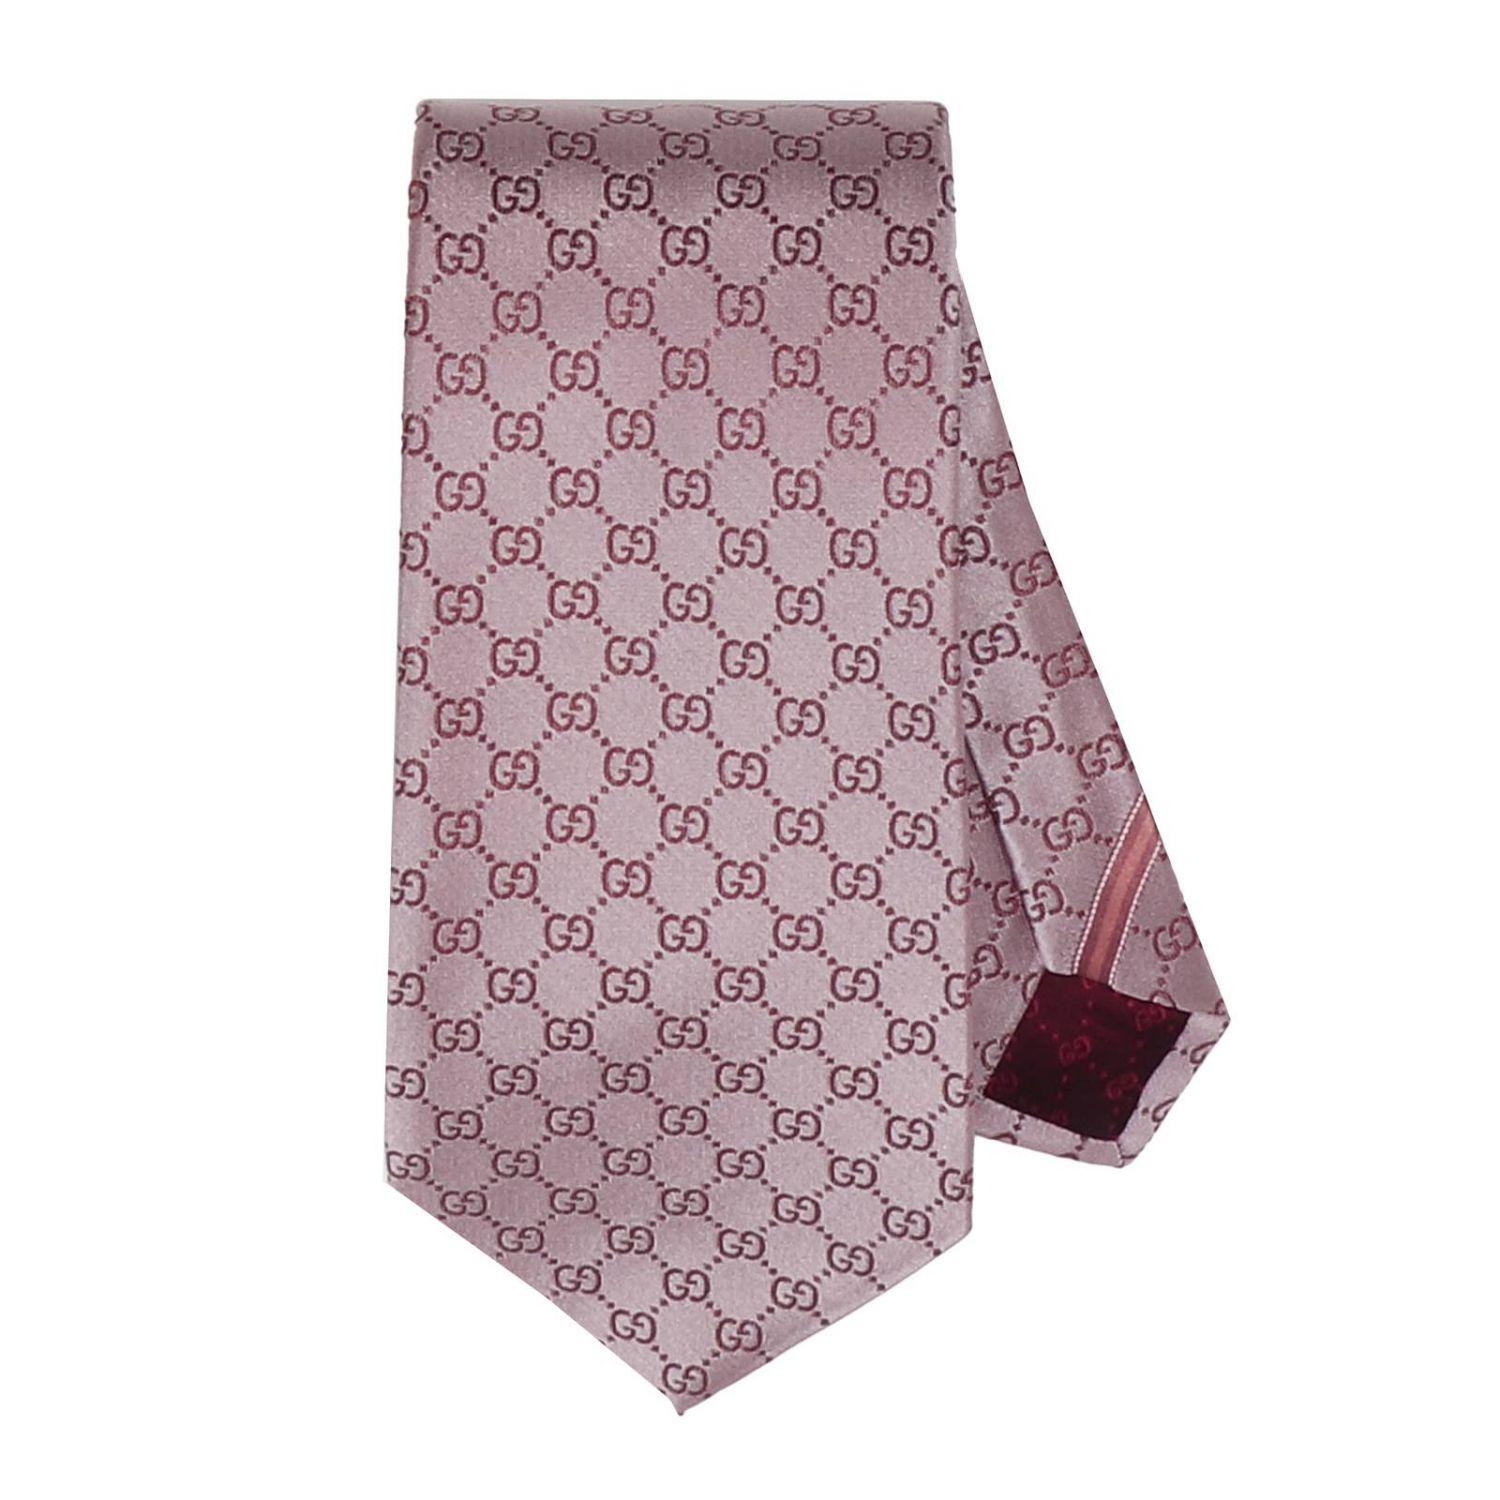 pink gucci tie